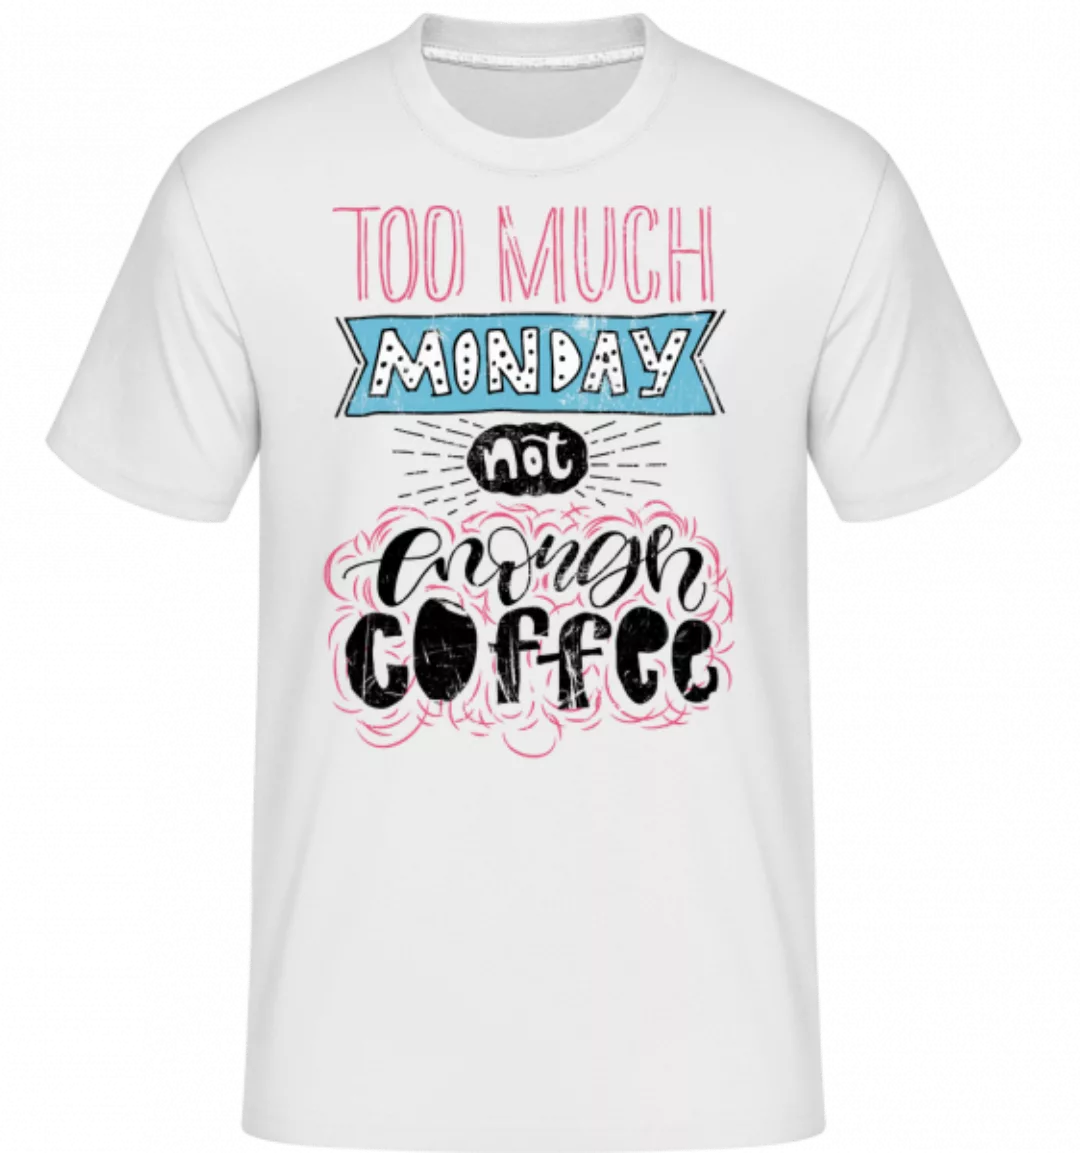 Too Much Monday · Shirtinator Männer T-Shirt günstig online kaufen